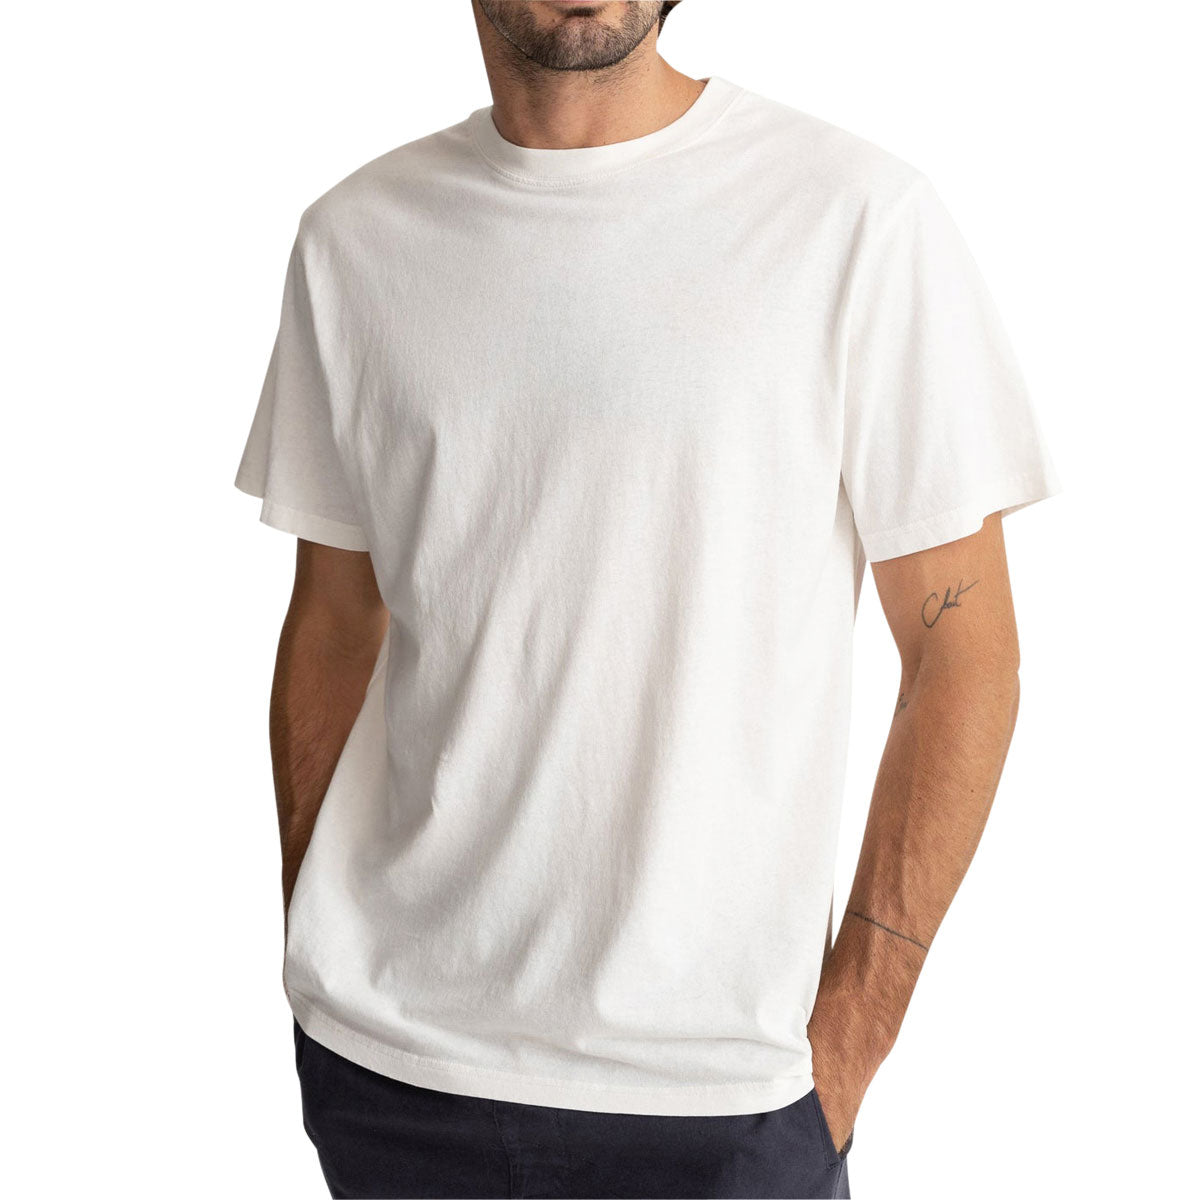 Rhythm Classic Brand T-Shirt - Vintage White image 2